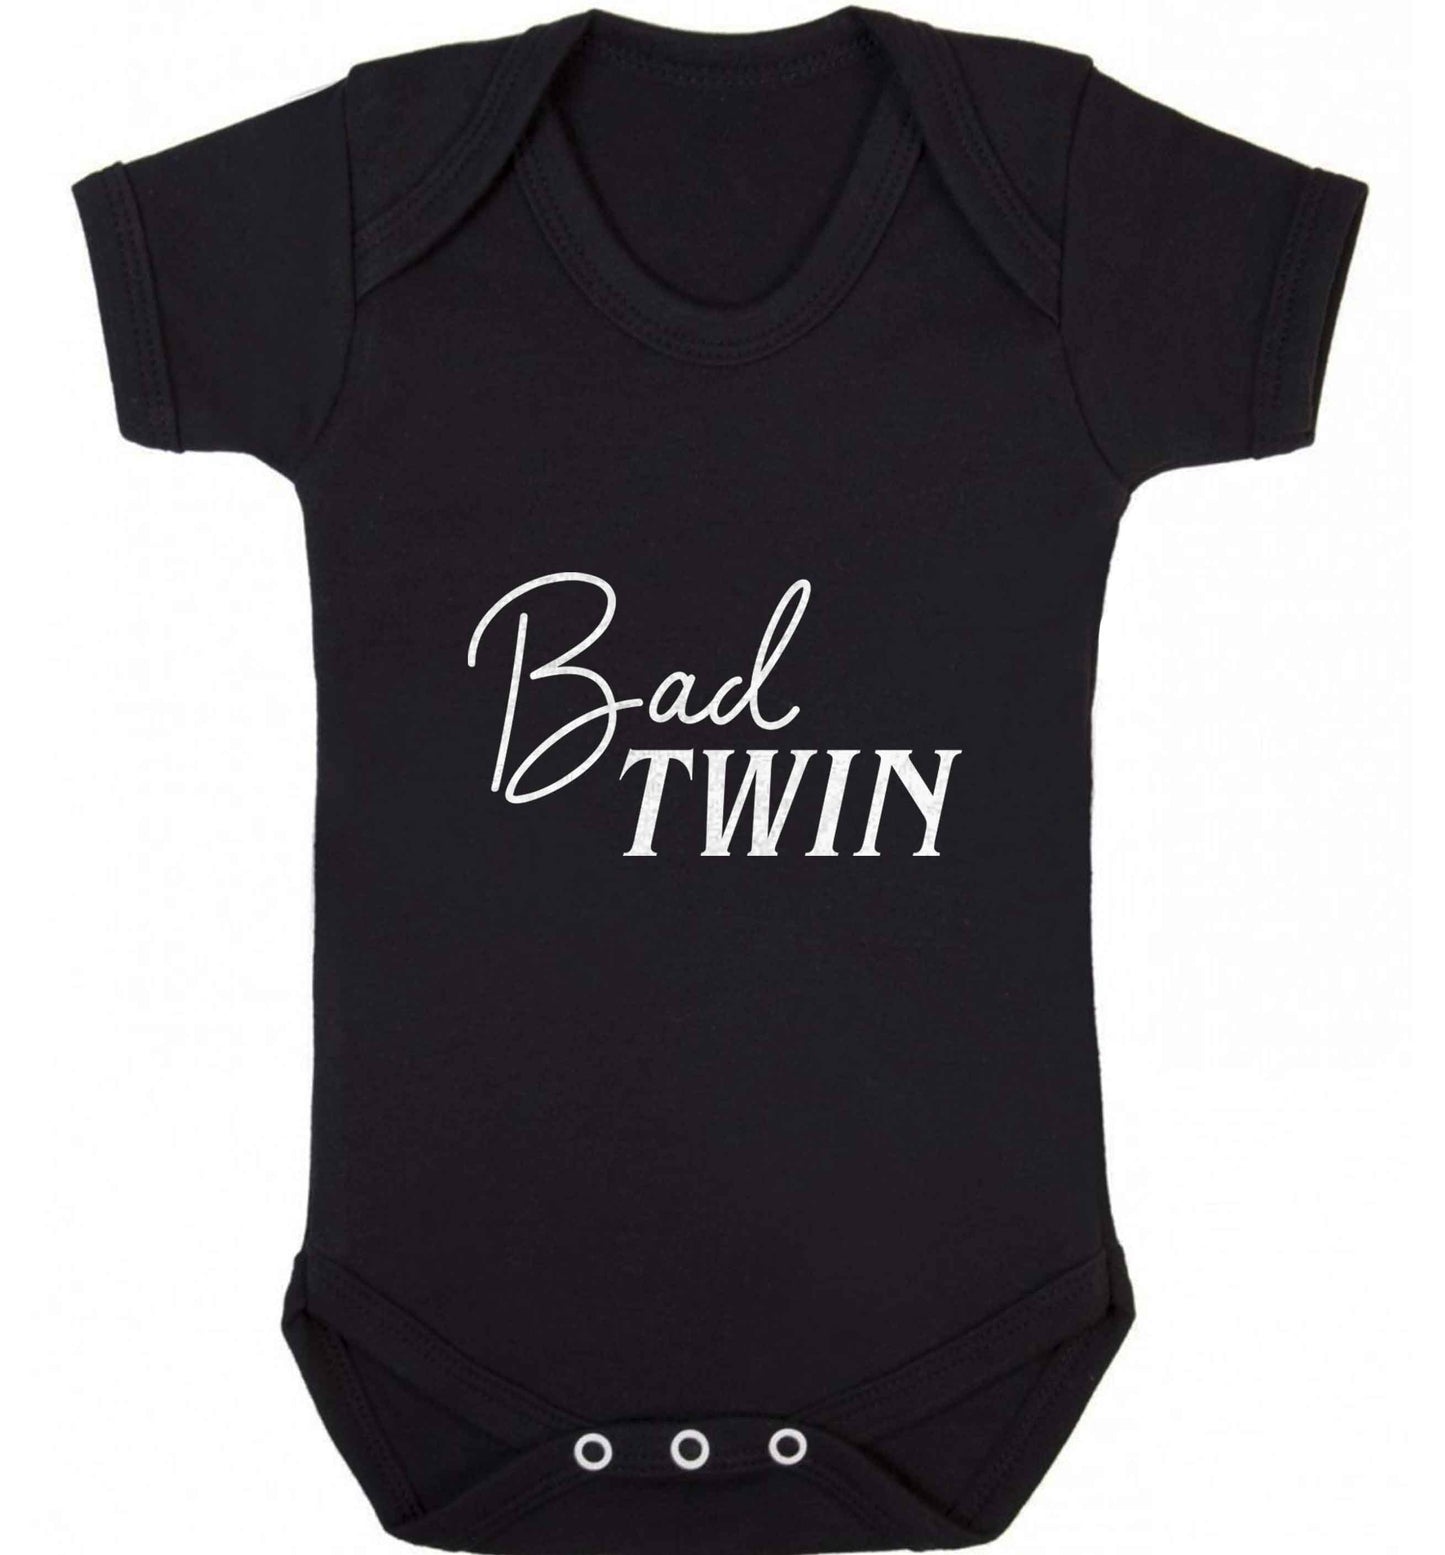 Bad twin baby vest black 18-24 months